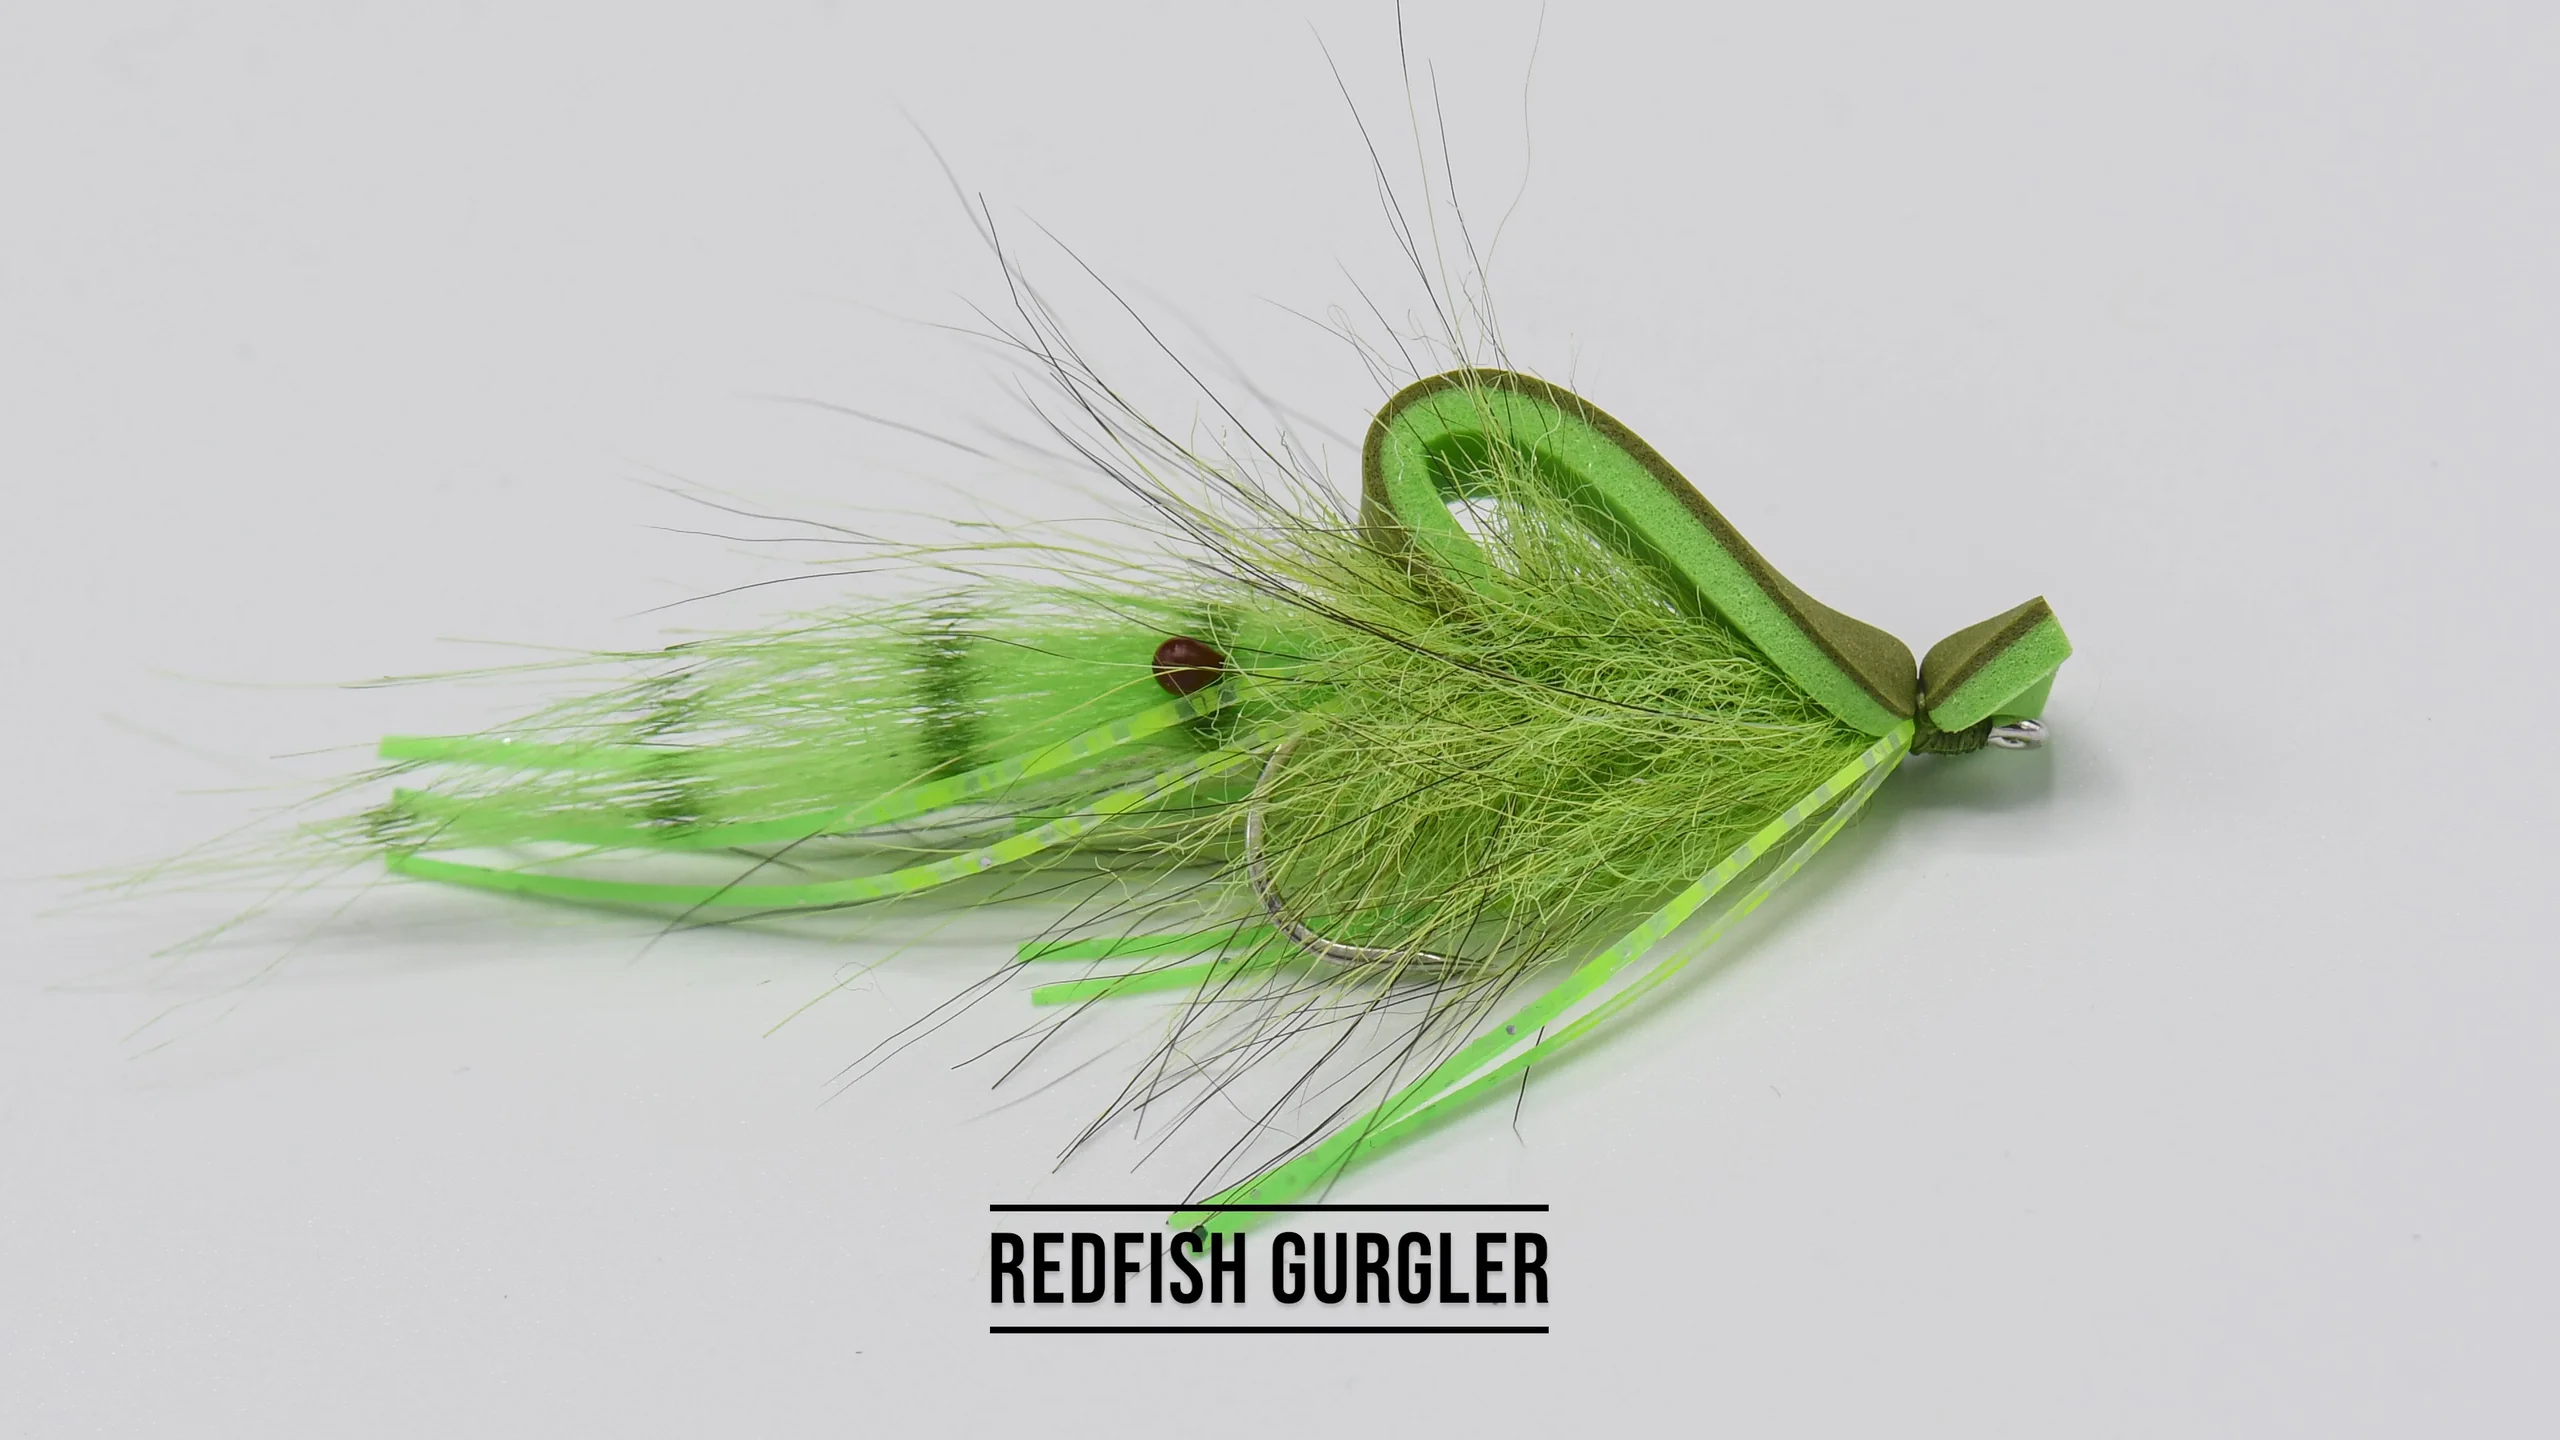 Redfish Gurgler on Vimeo